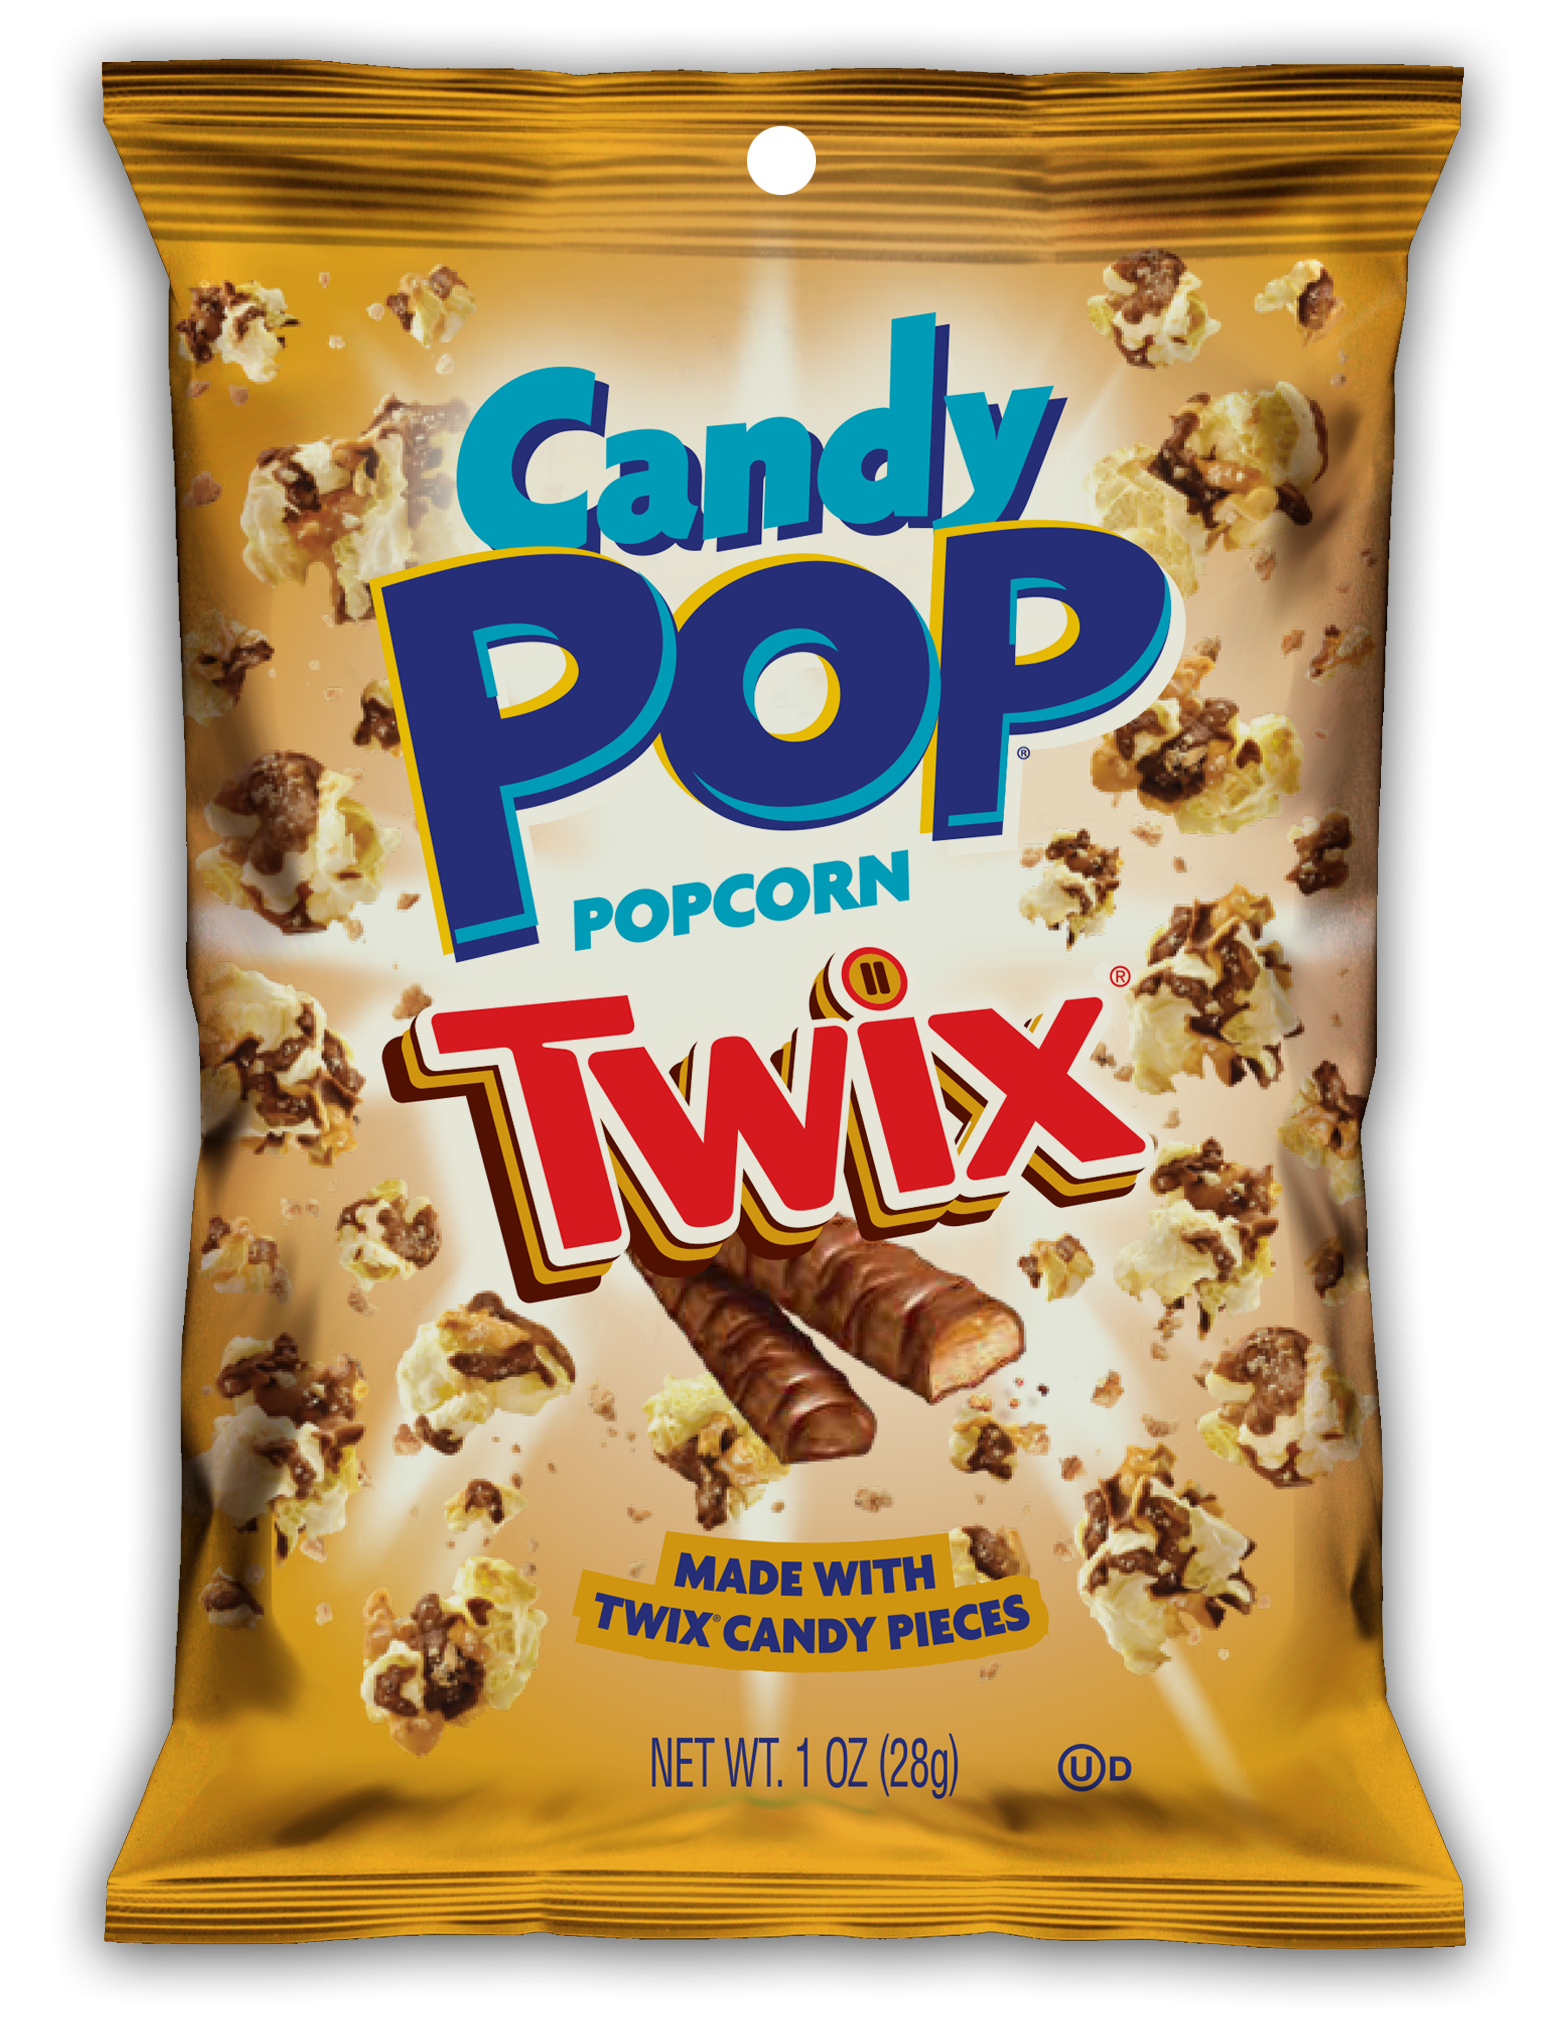 Candy Pop TWIX Popcron 6 innerpacks per case 1.0 oz